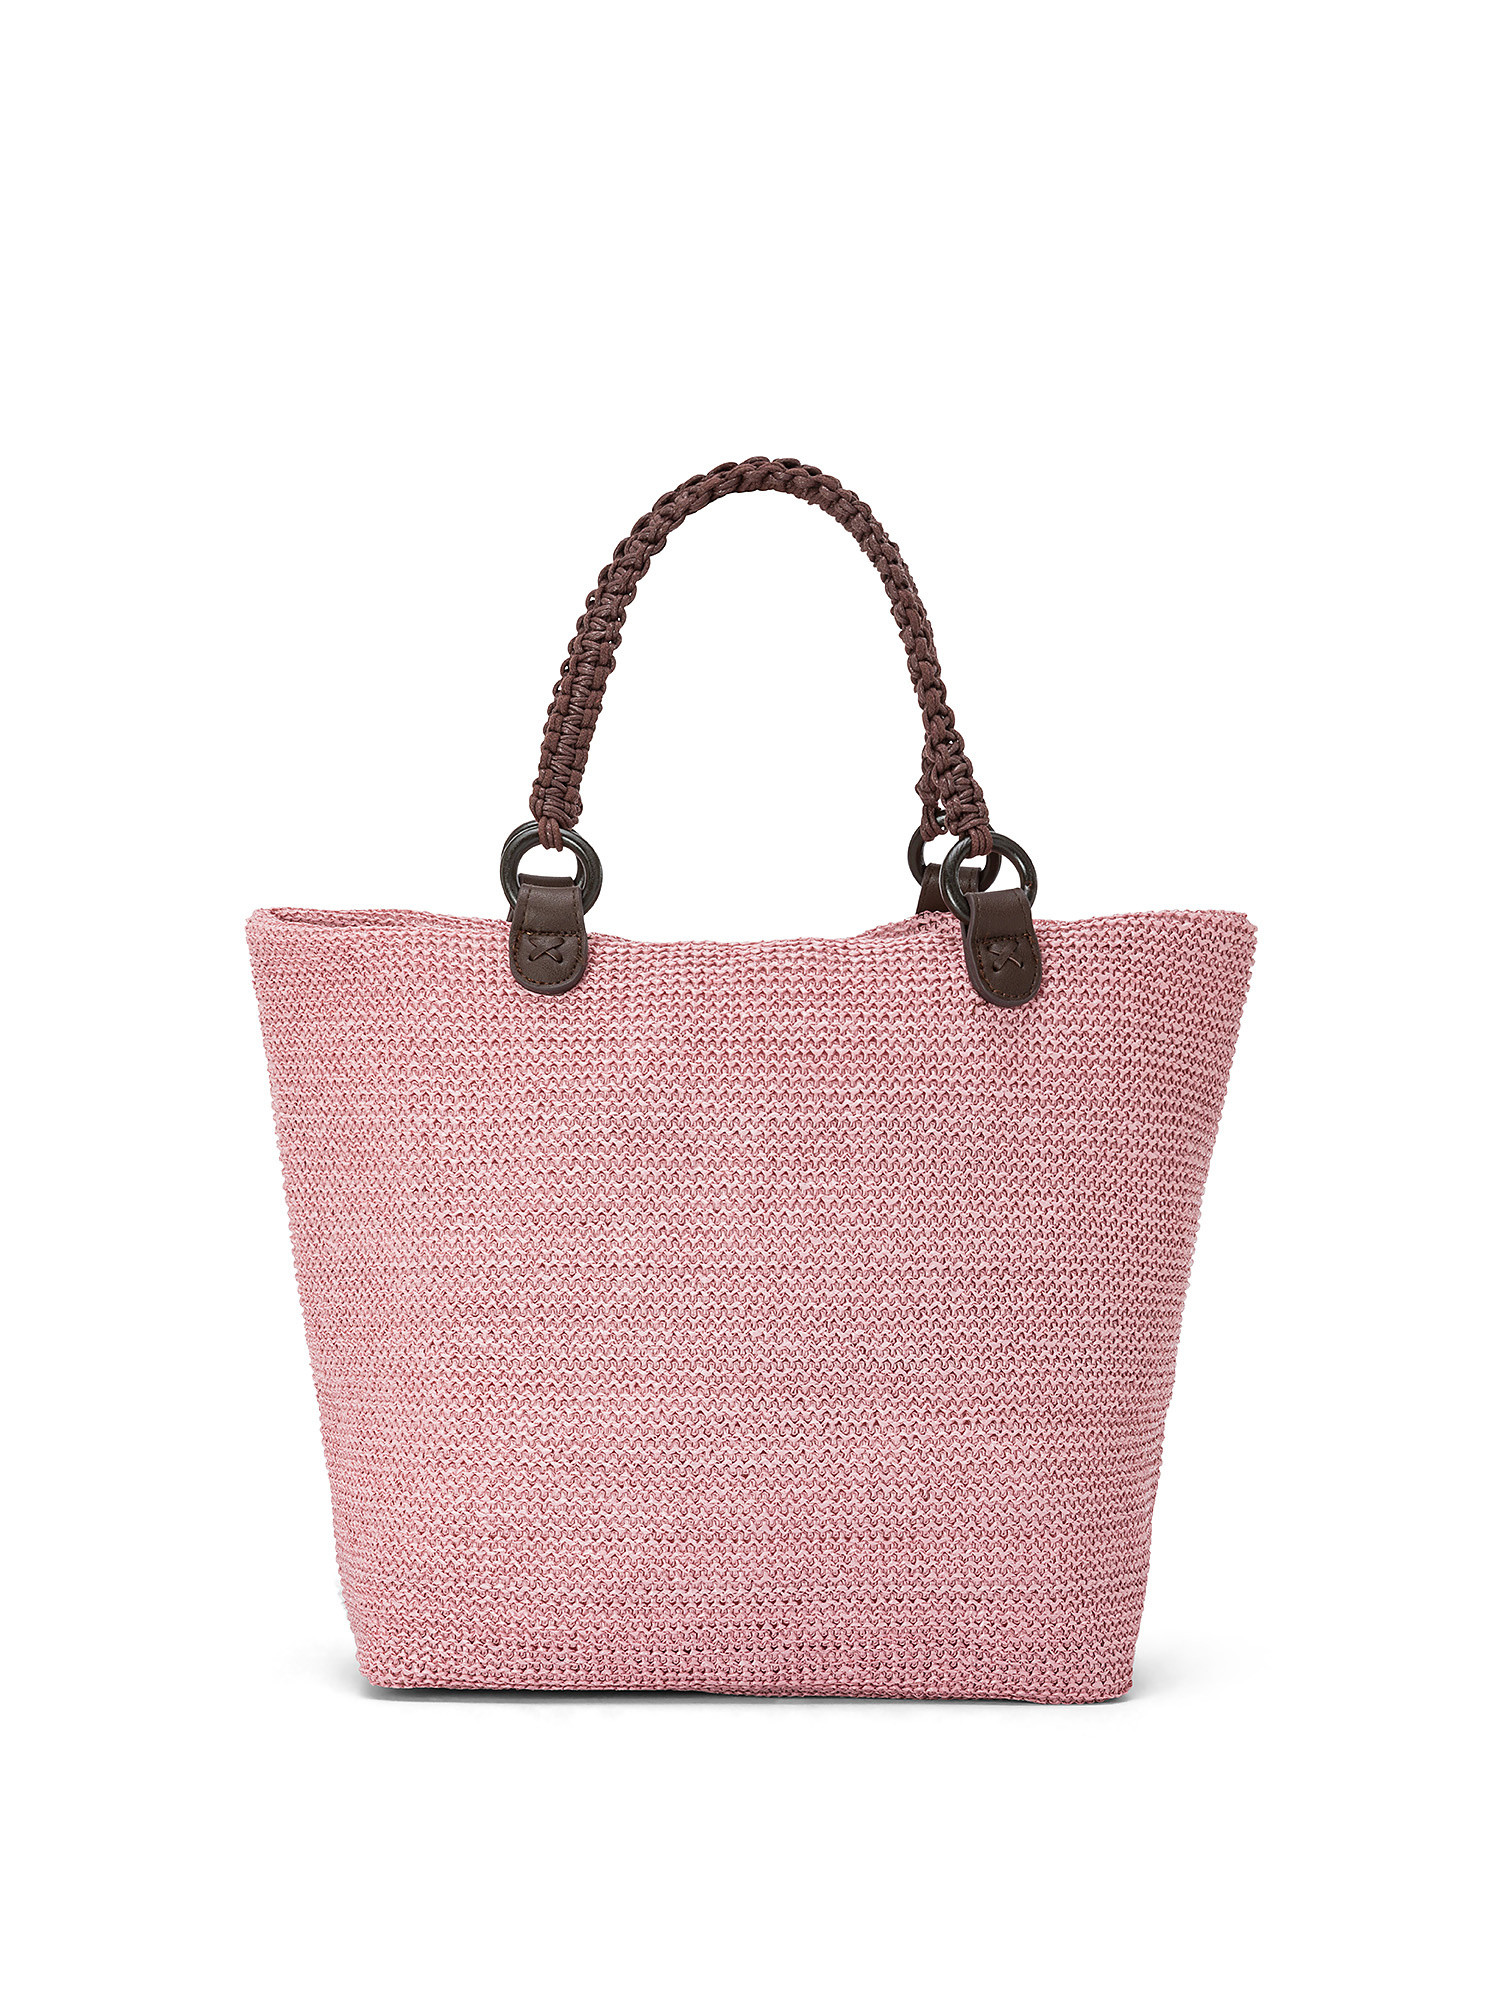 Koan - Shopping bag, Rosa, large image number 0